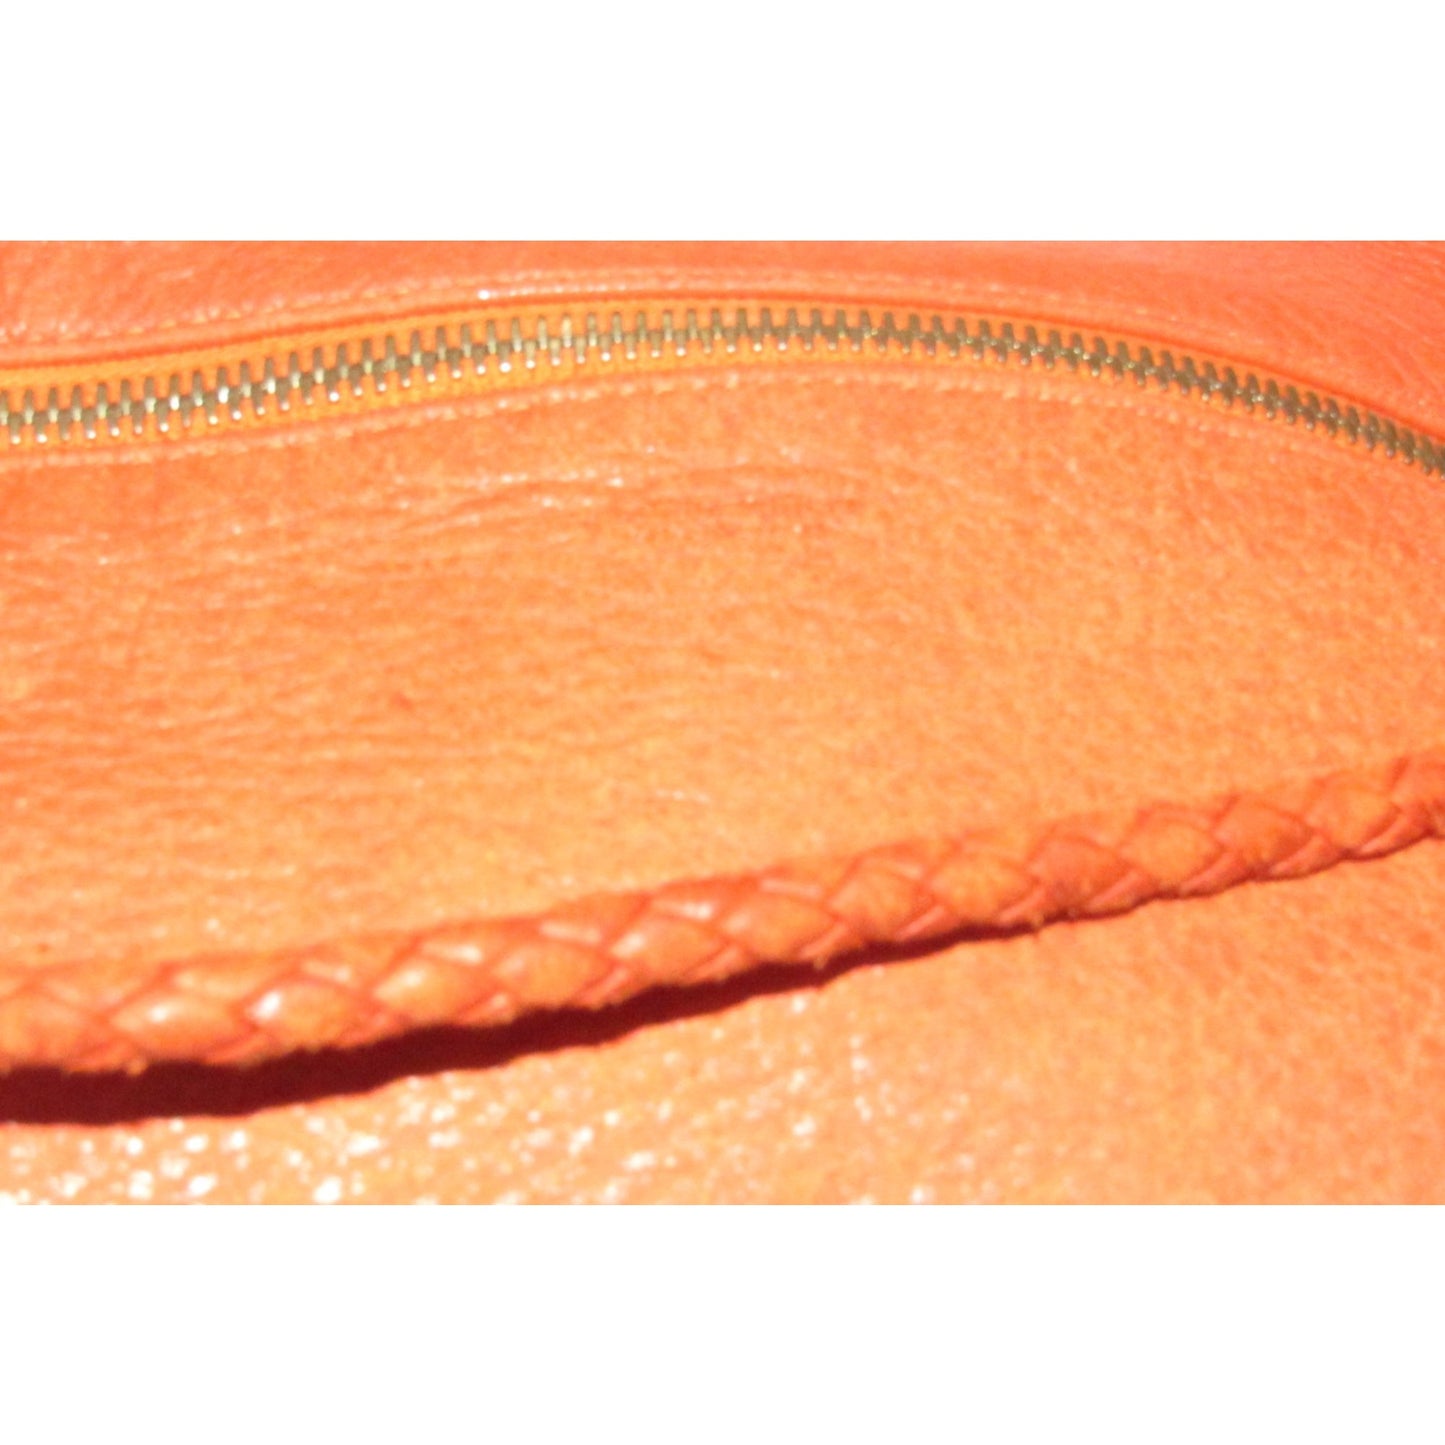 High- end bohemian, RARE, Bottega Veneta, orange leather with a braided leather strap and trim, satchel style, bucket purse